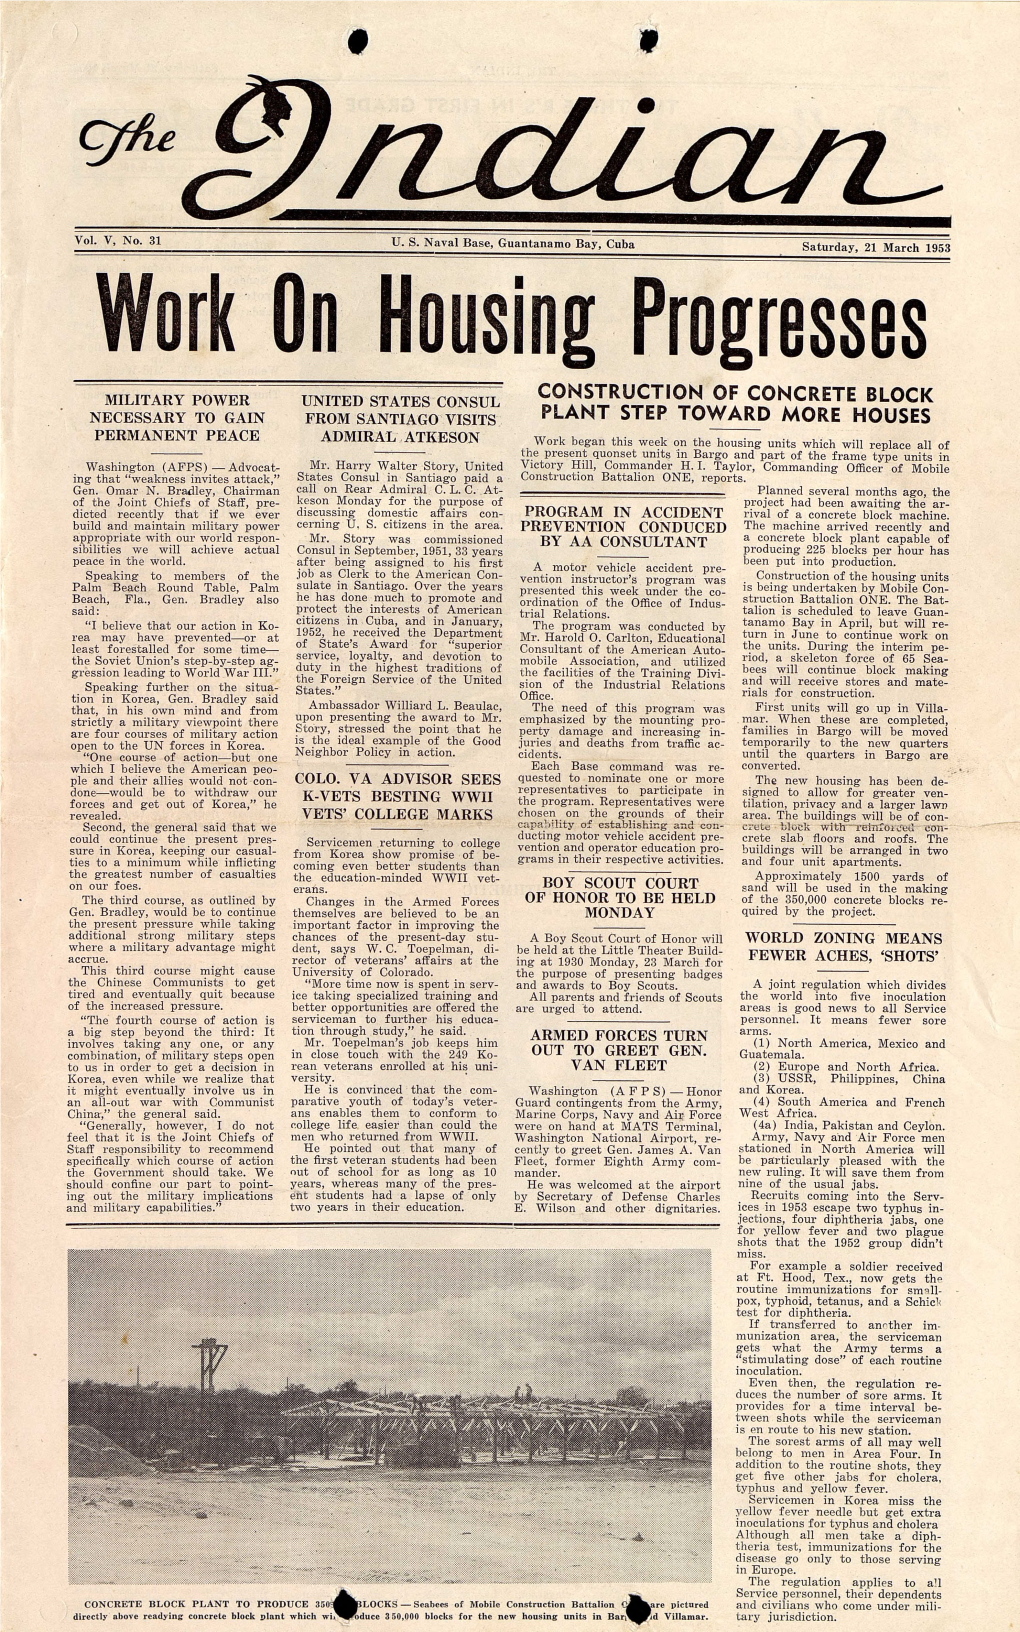 Work on Housing Progresses